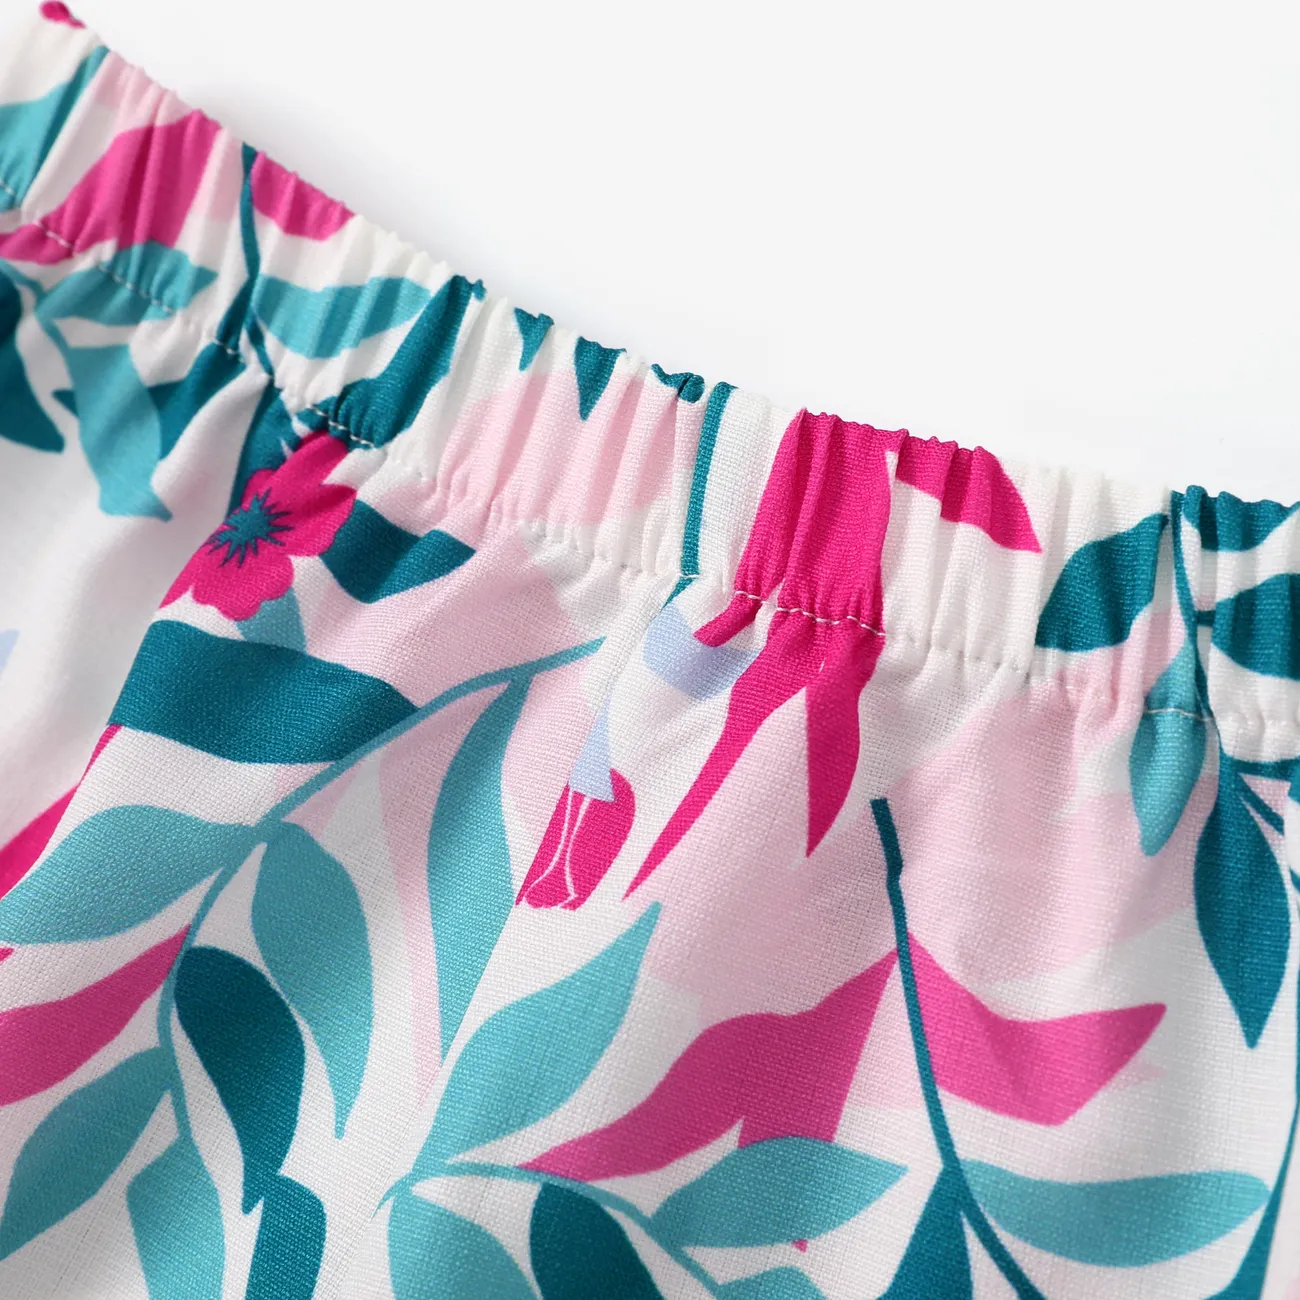 Baby Girl 3pcs Ruffled Romper and Floral Print Cami Top and Shorts Set PINK-1 big image 1